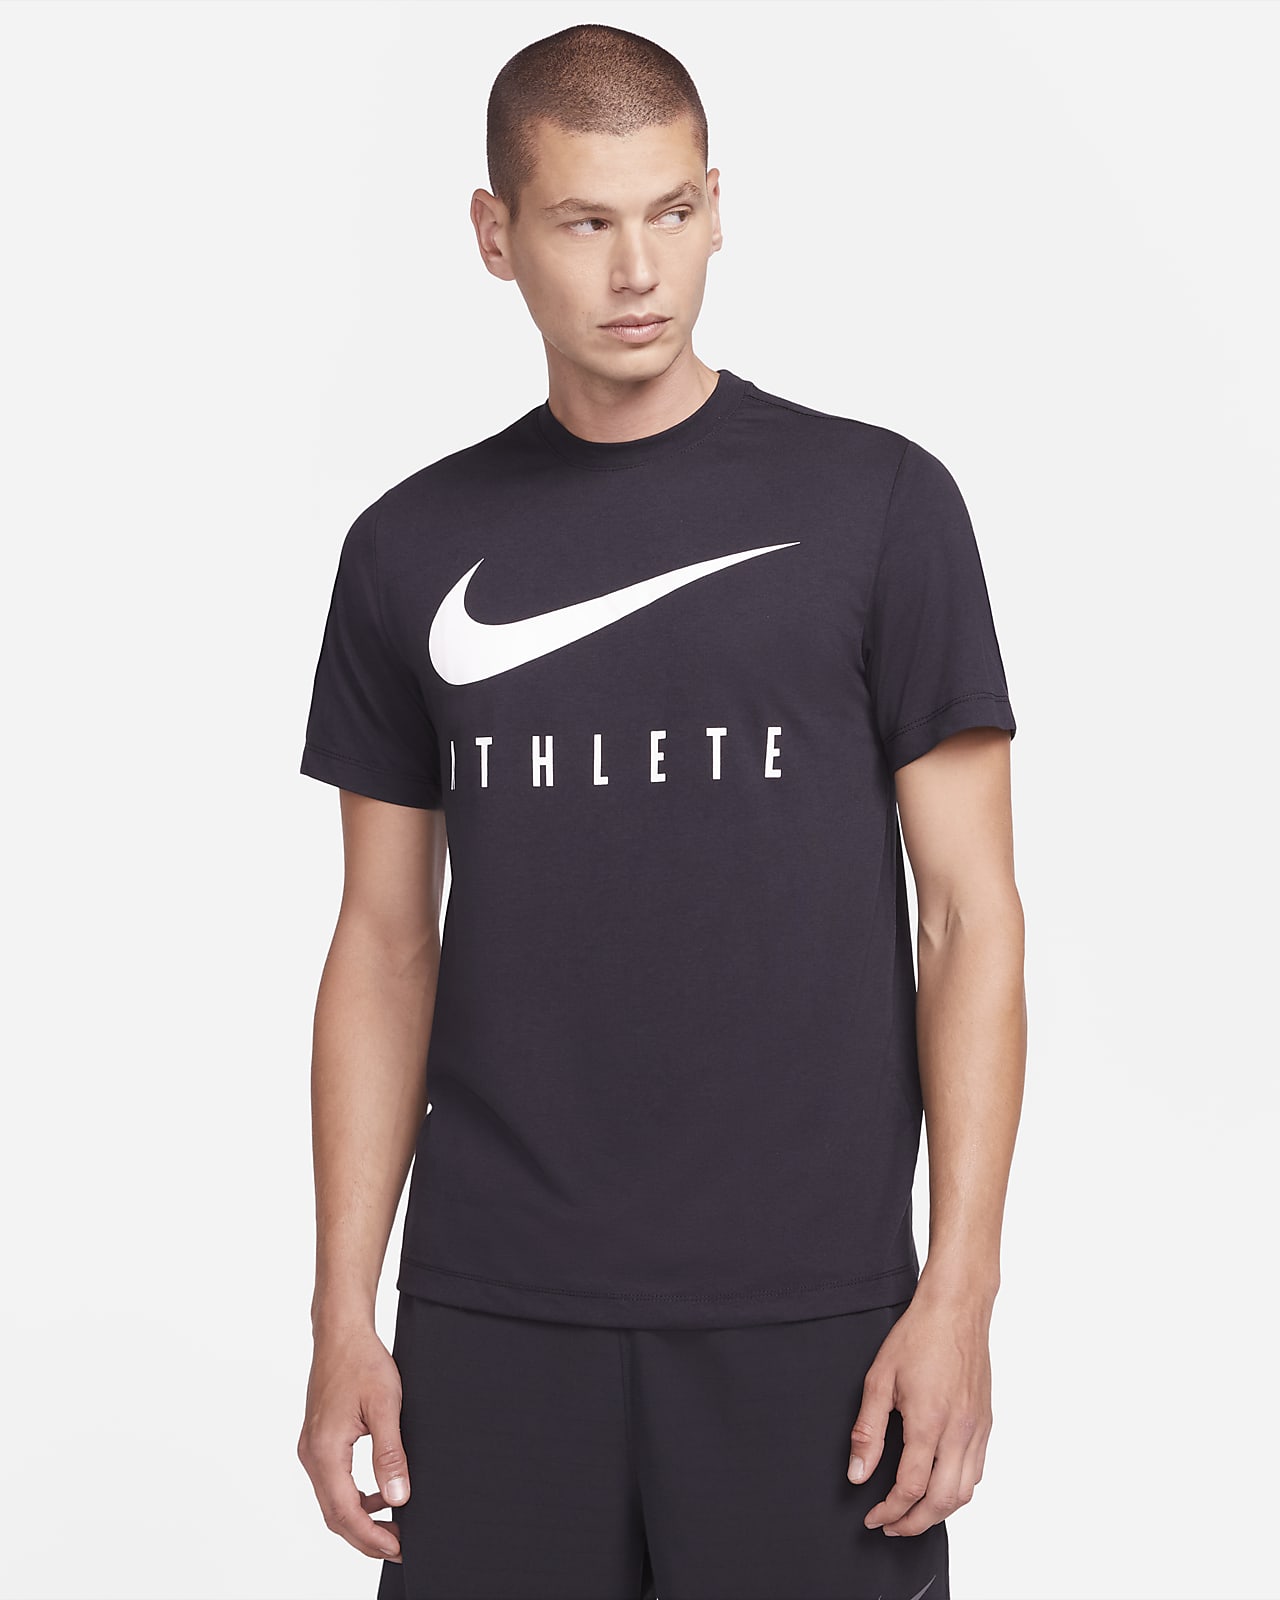 Netherlands Men's Nike T-Shirt. Nike LU